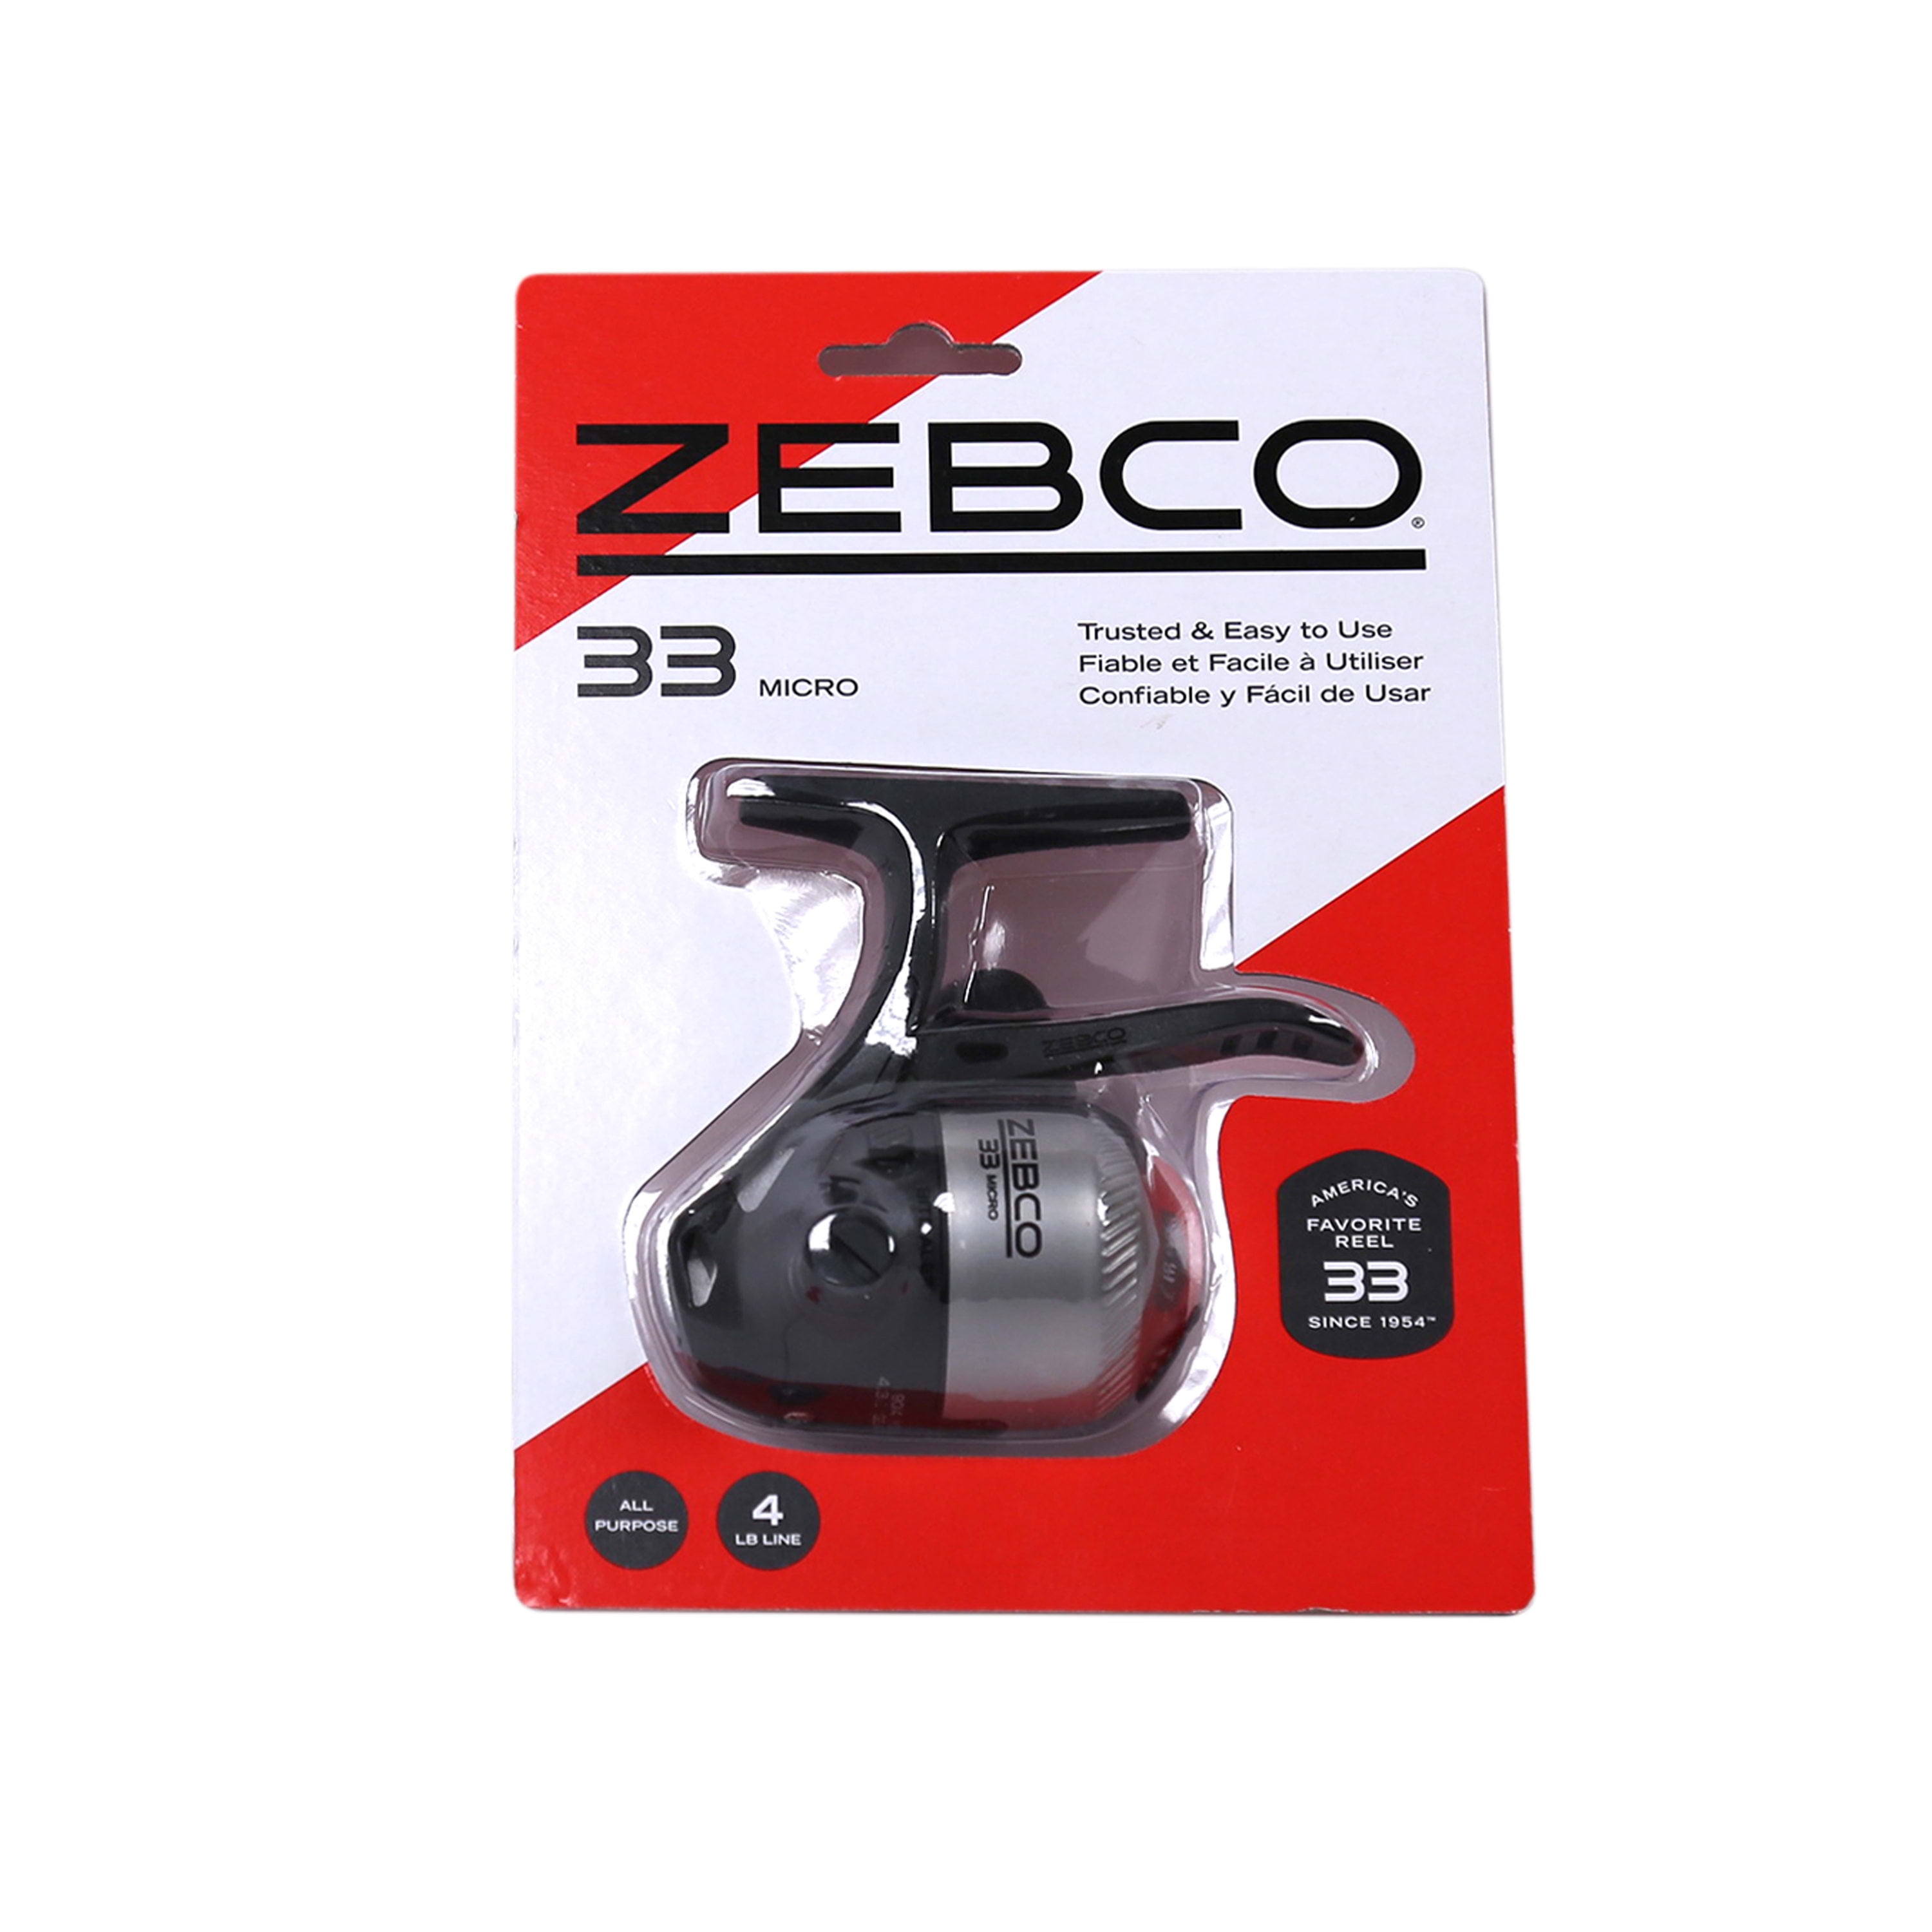 Zebco 33 Micro 502ul Triggerspin Combo 4lb Zebco Cajun Line for